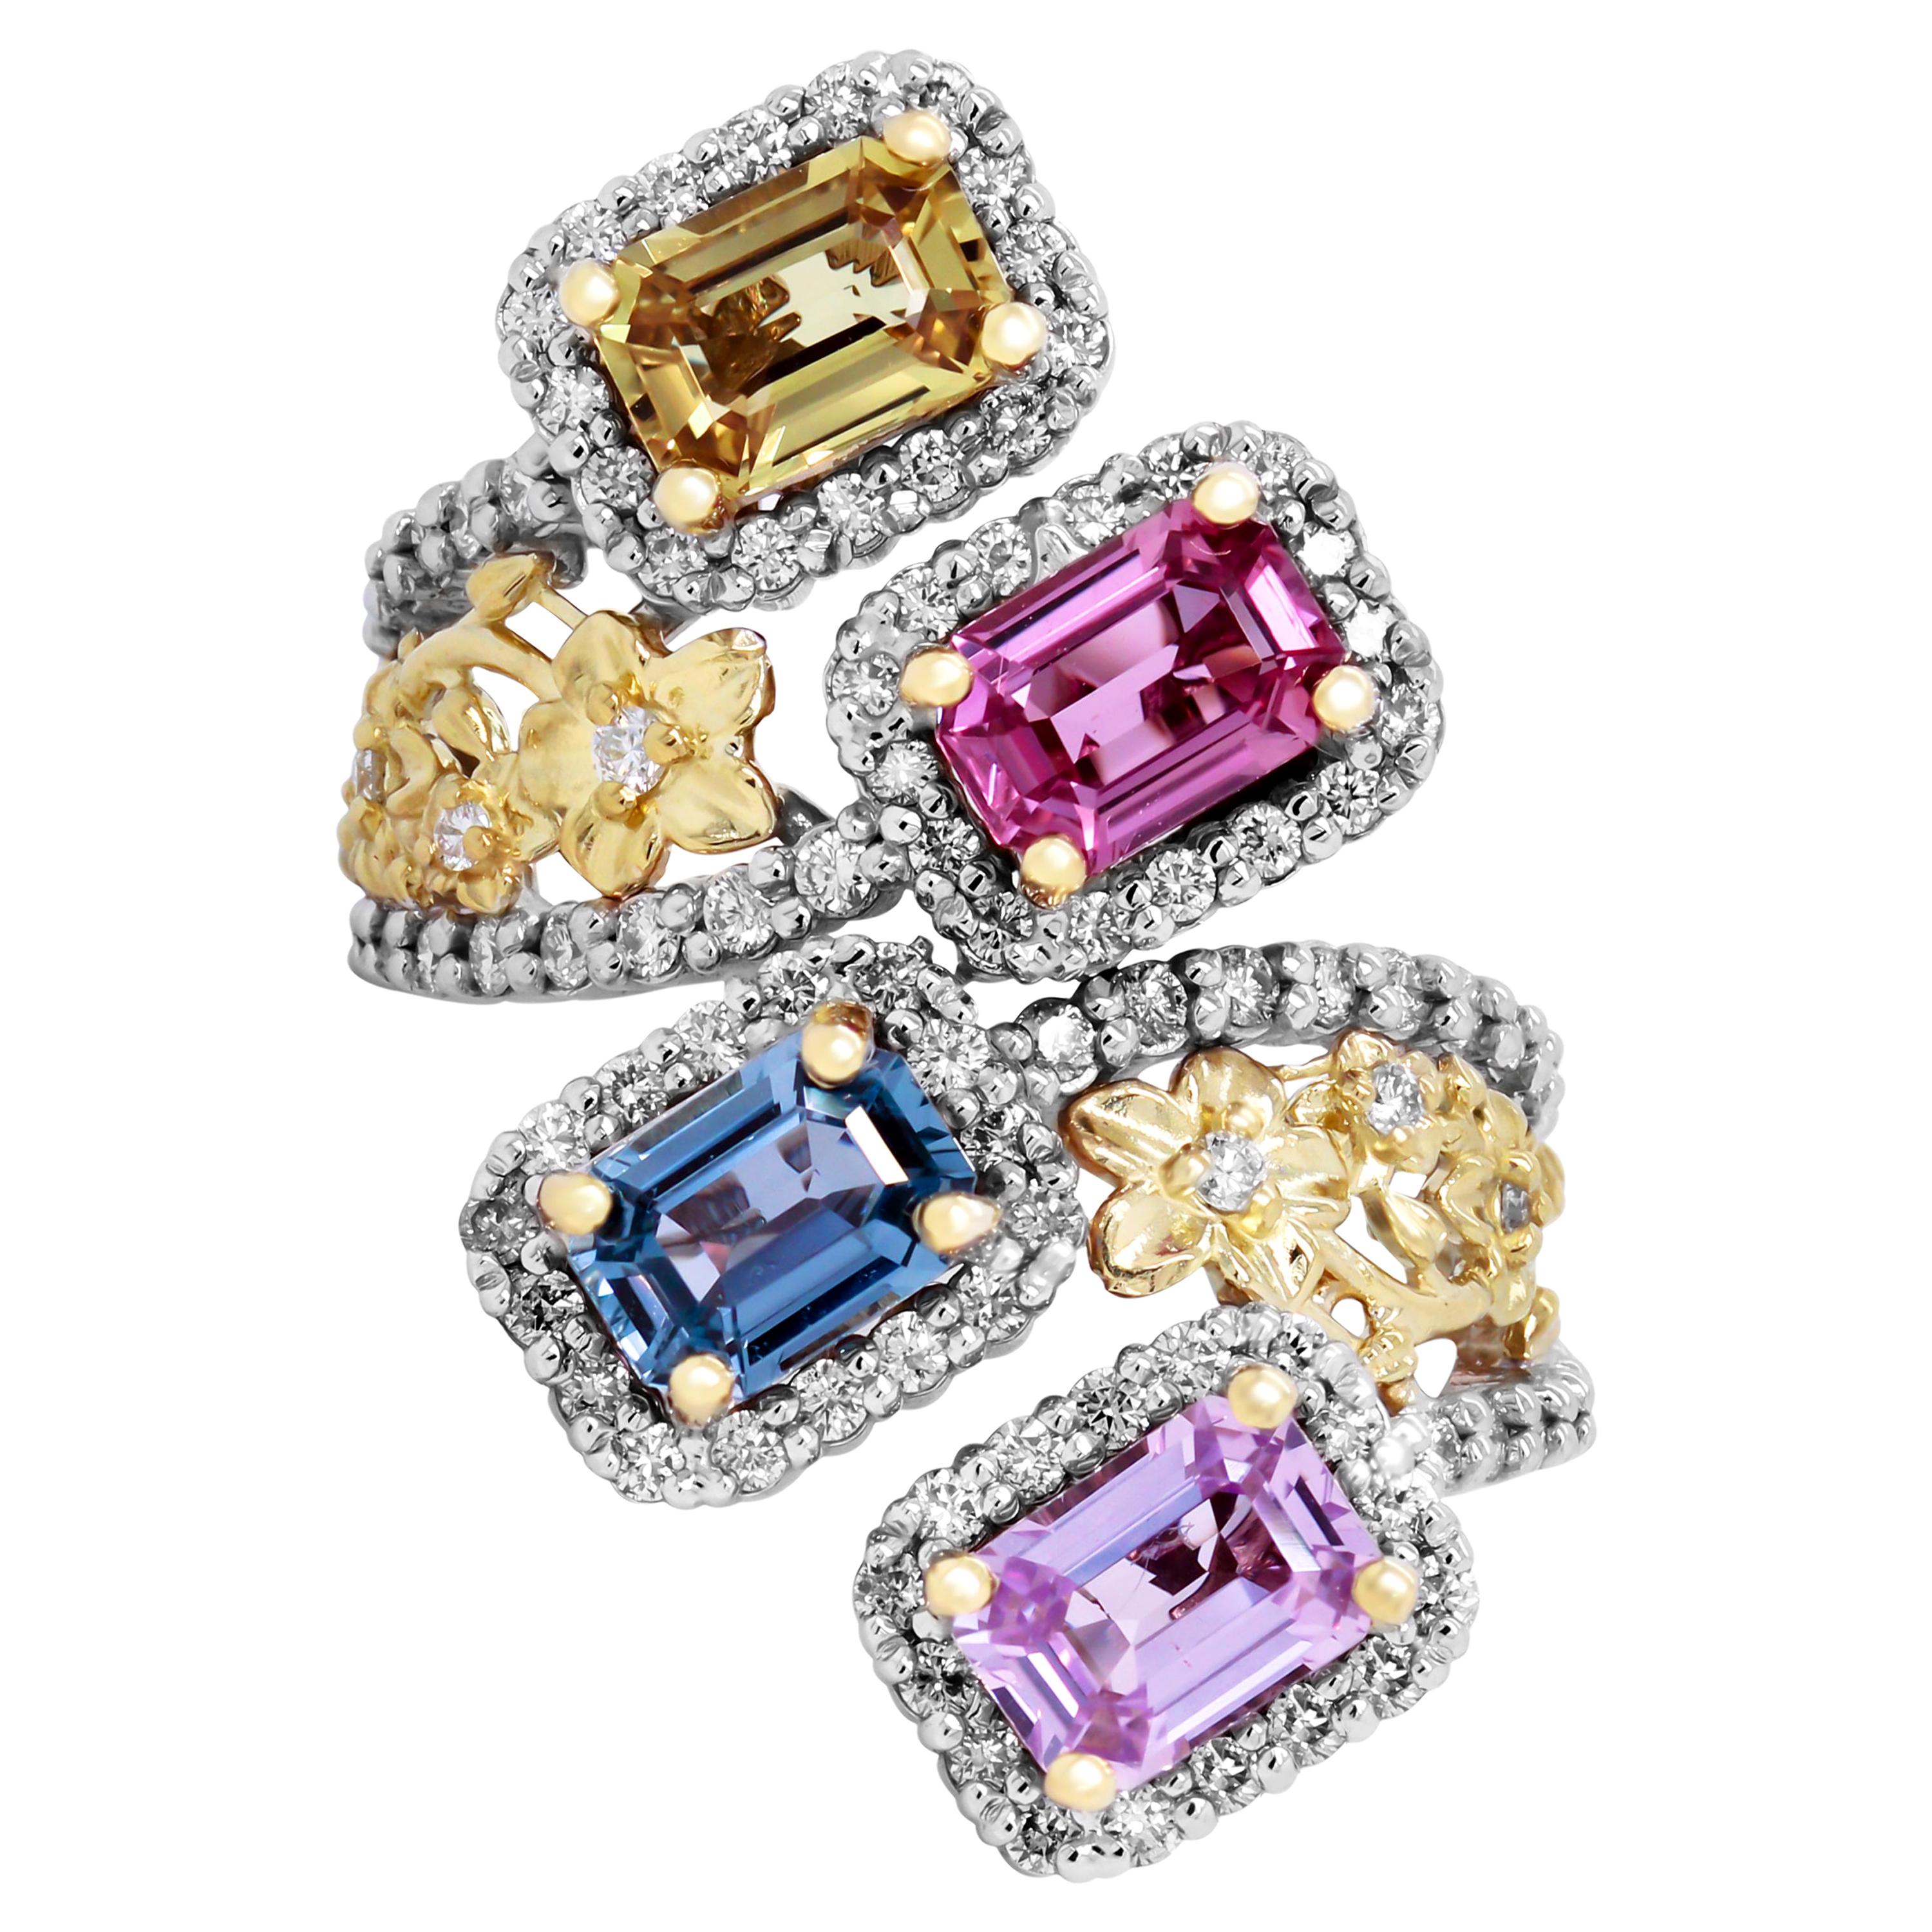 Stambolian 18K Yellow White Gold Floral Diamonds Emerald Cut Sapphires Ring